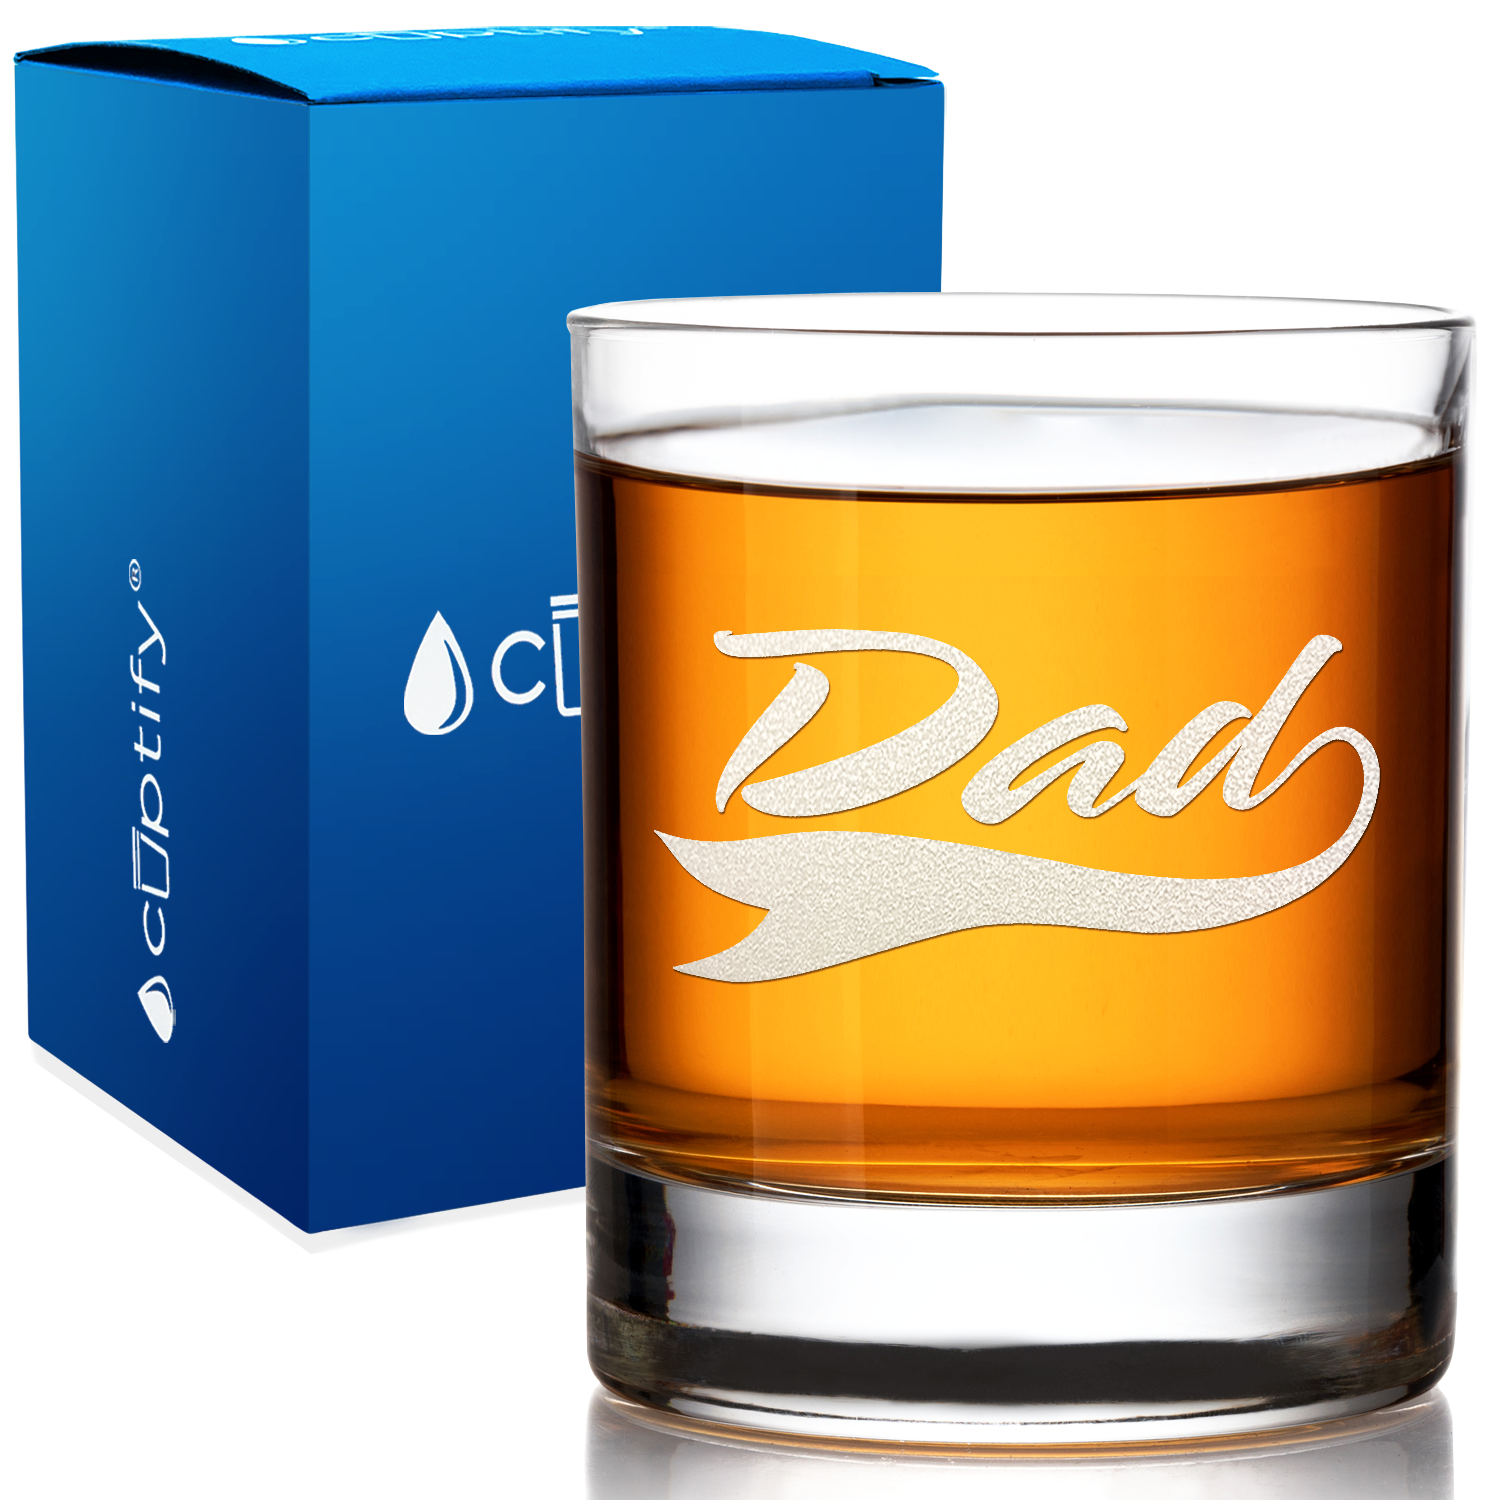 Dad on 10.25oz Whiskey Glass